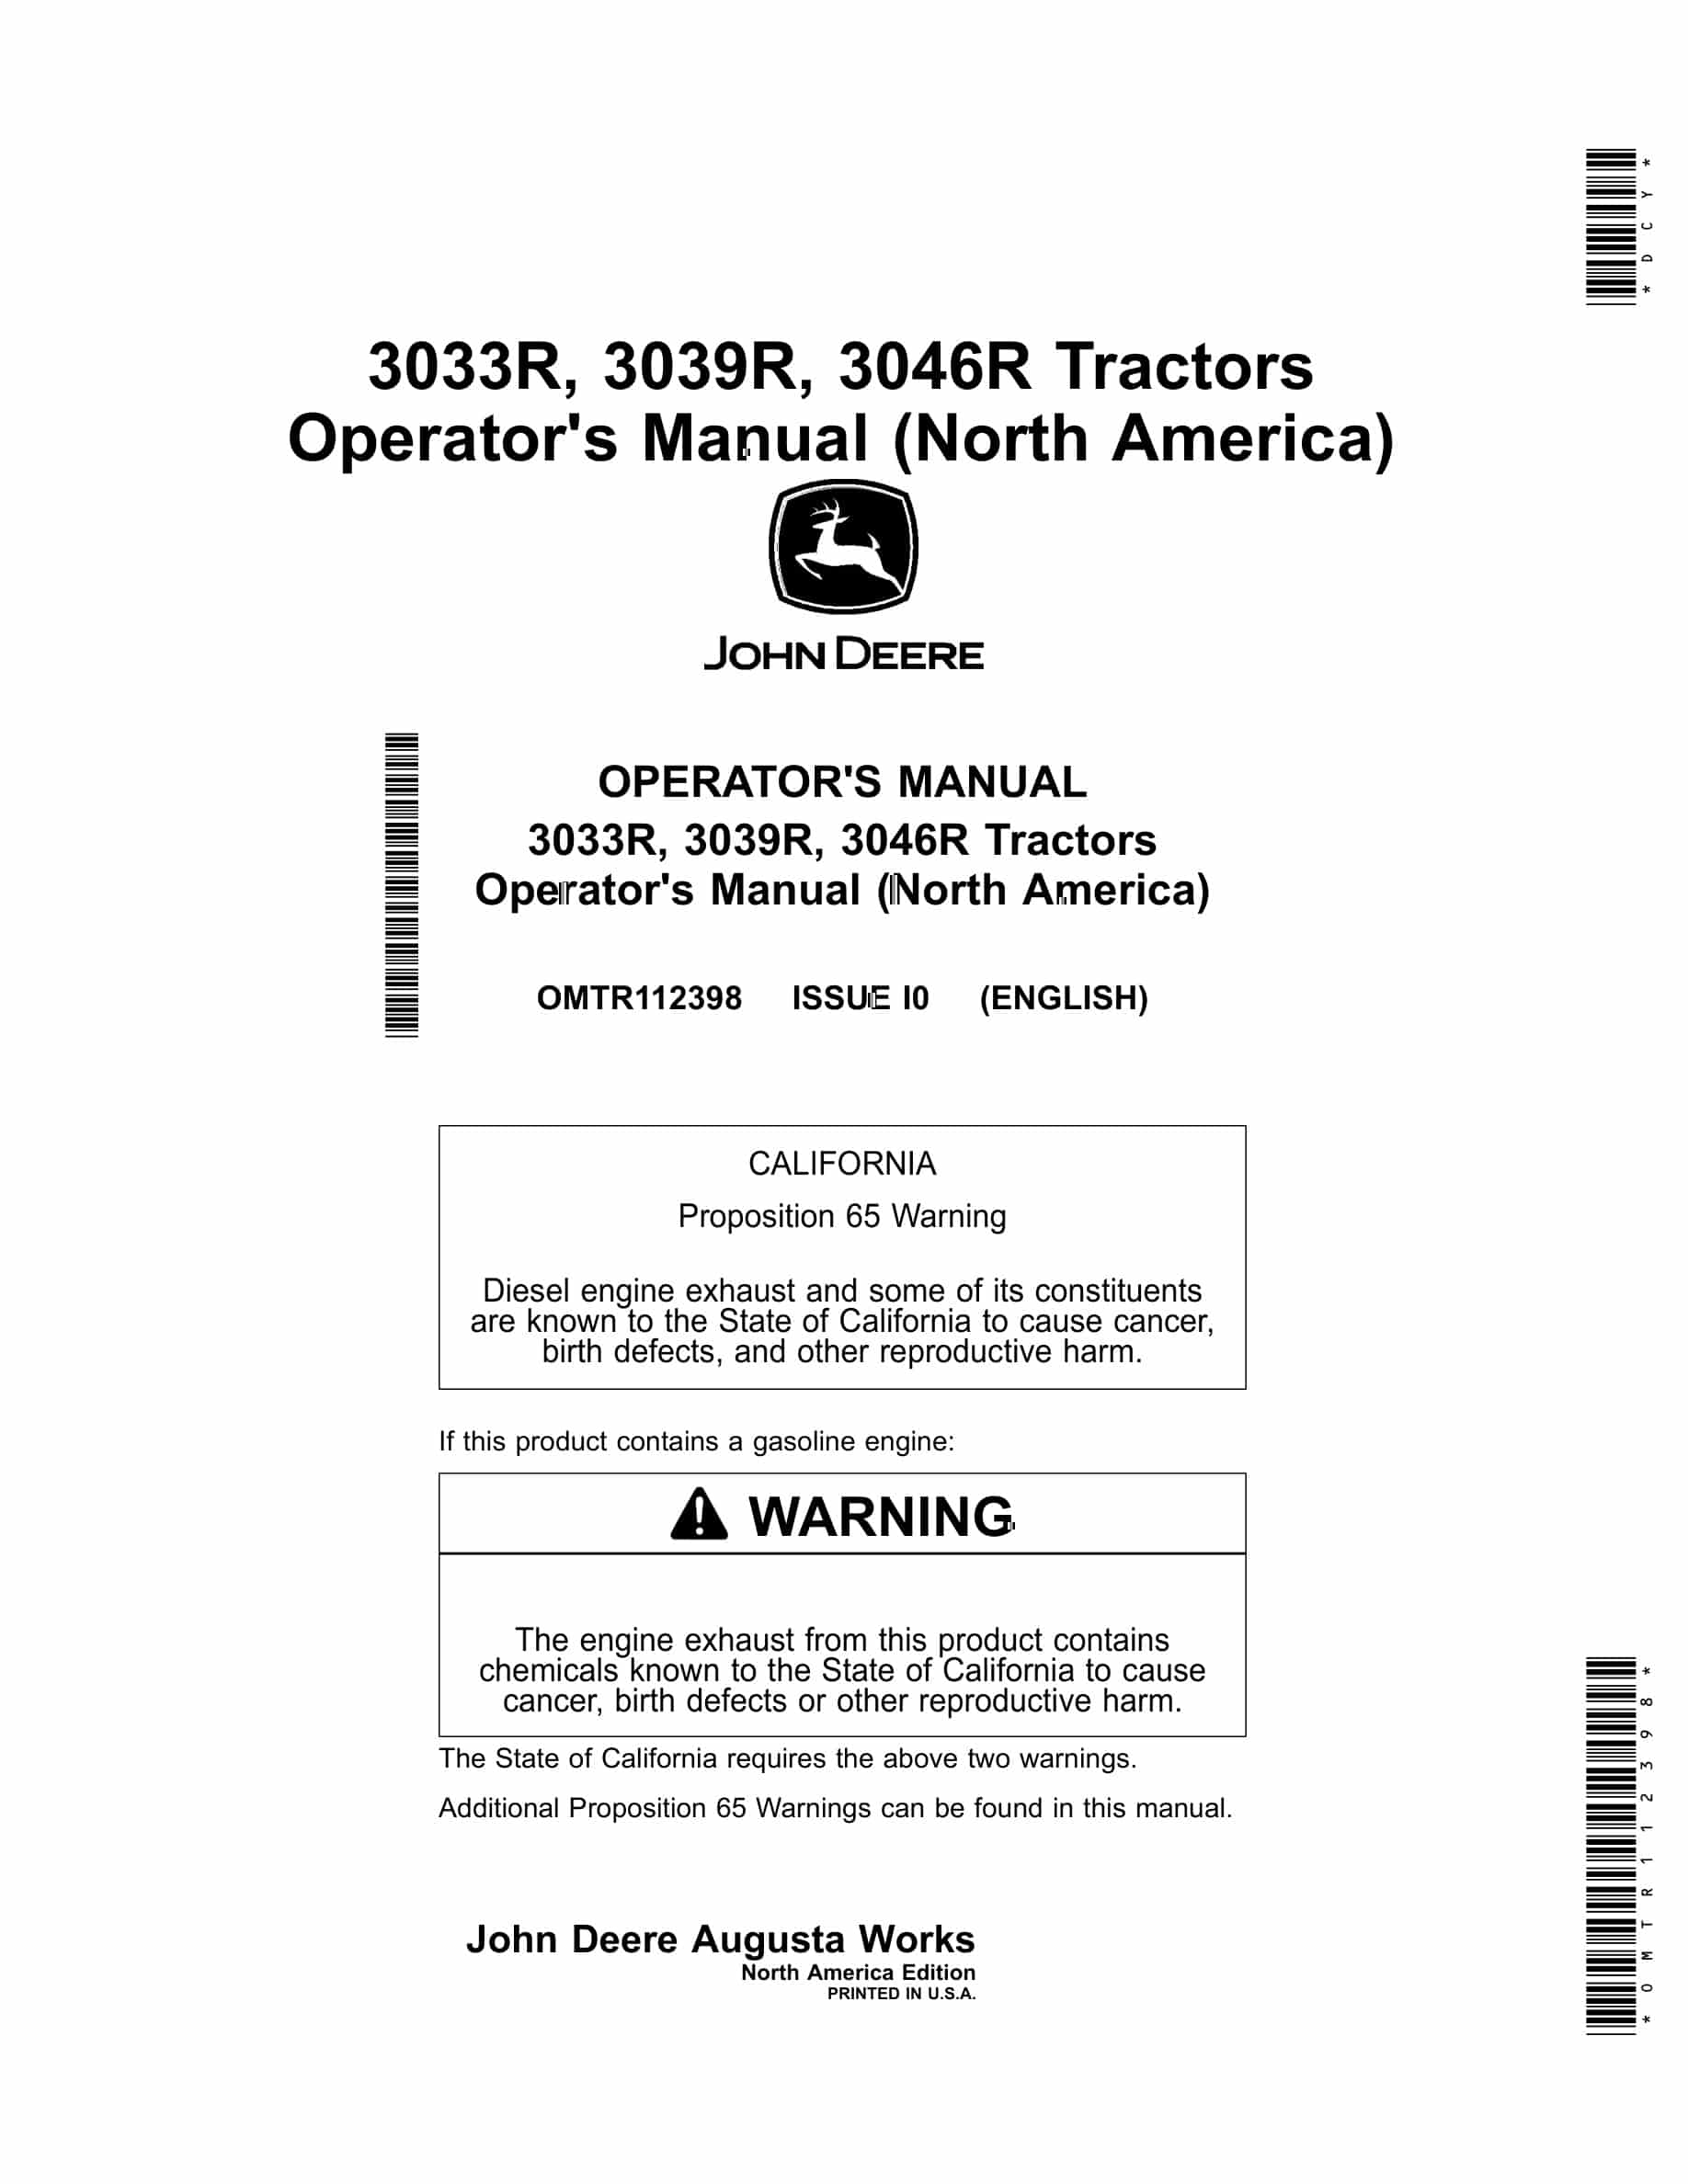 John Deere 3033R, 3039R, 3046R Tractor Operator Manual OMTR112398-1